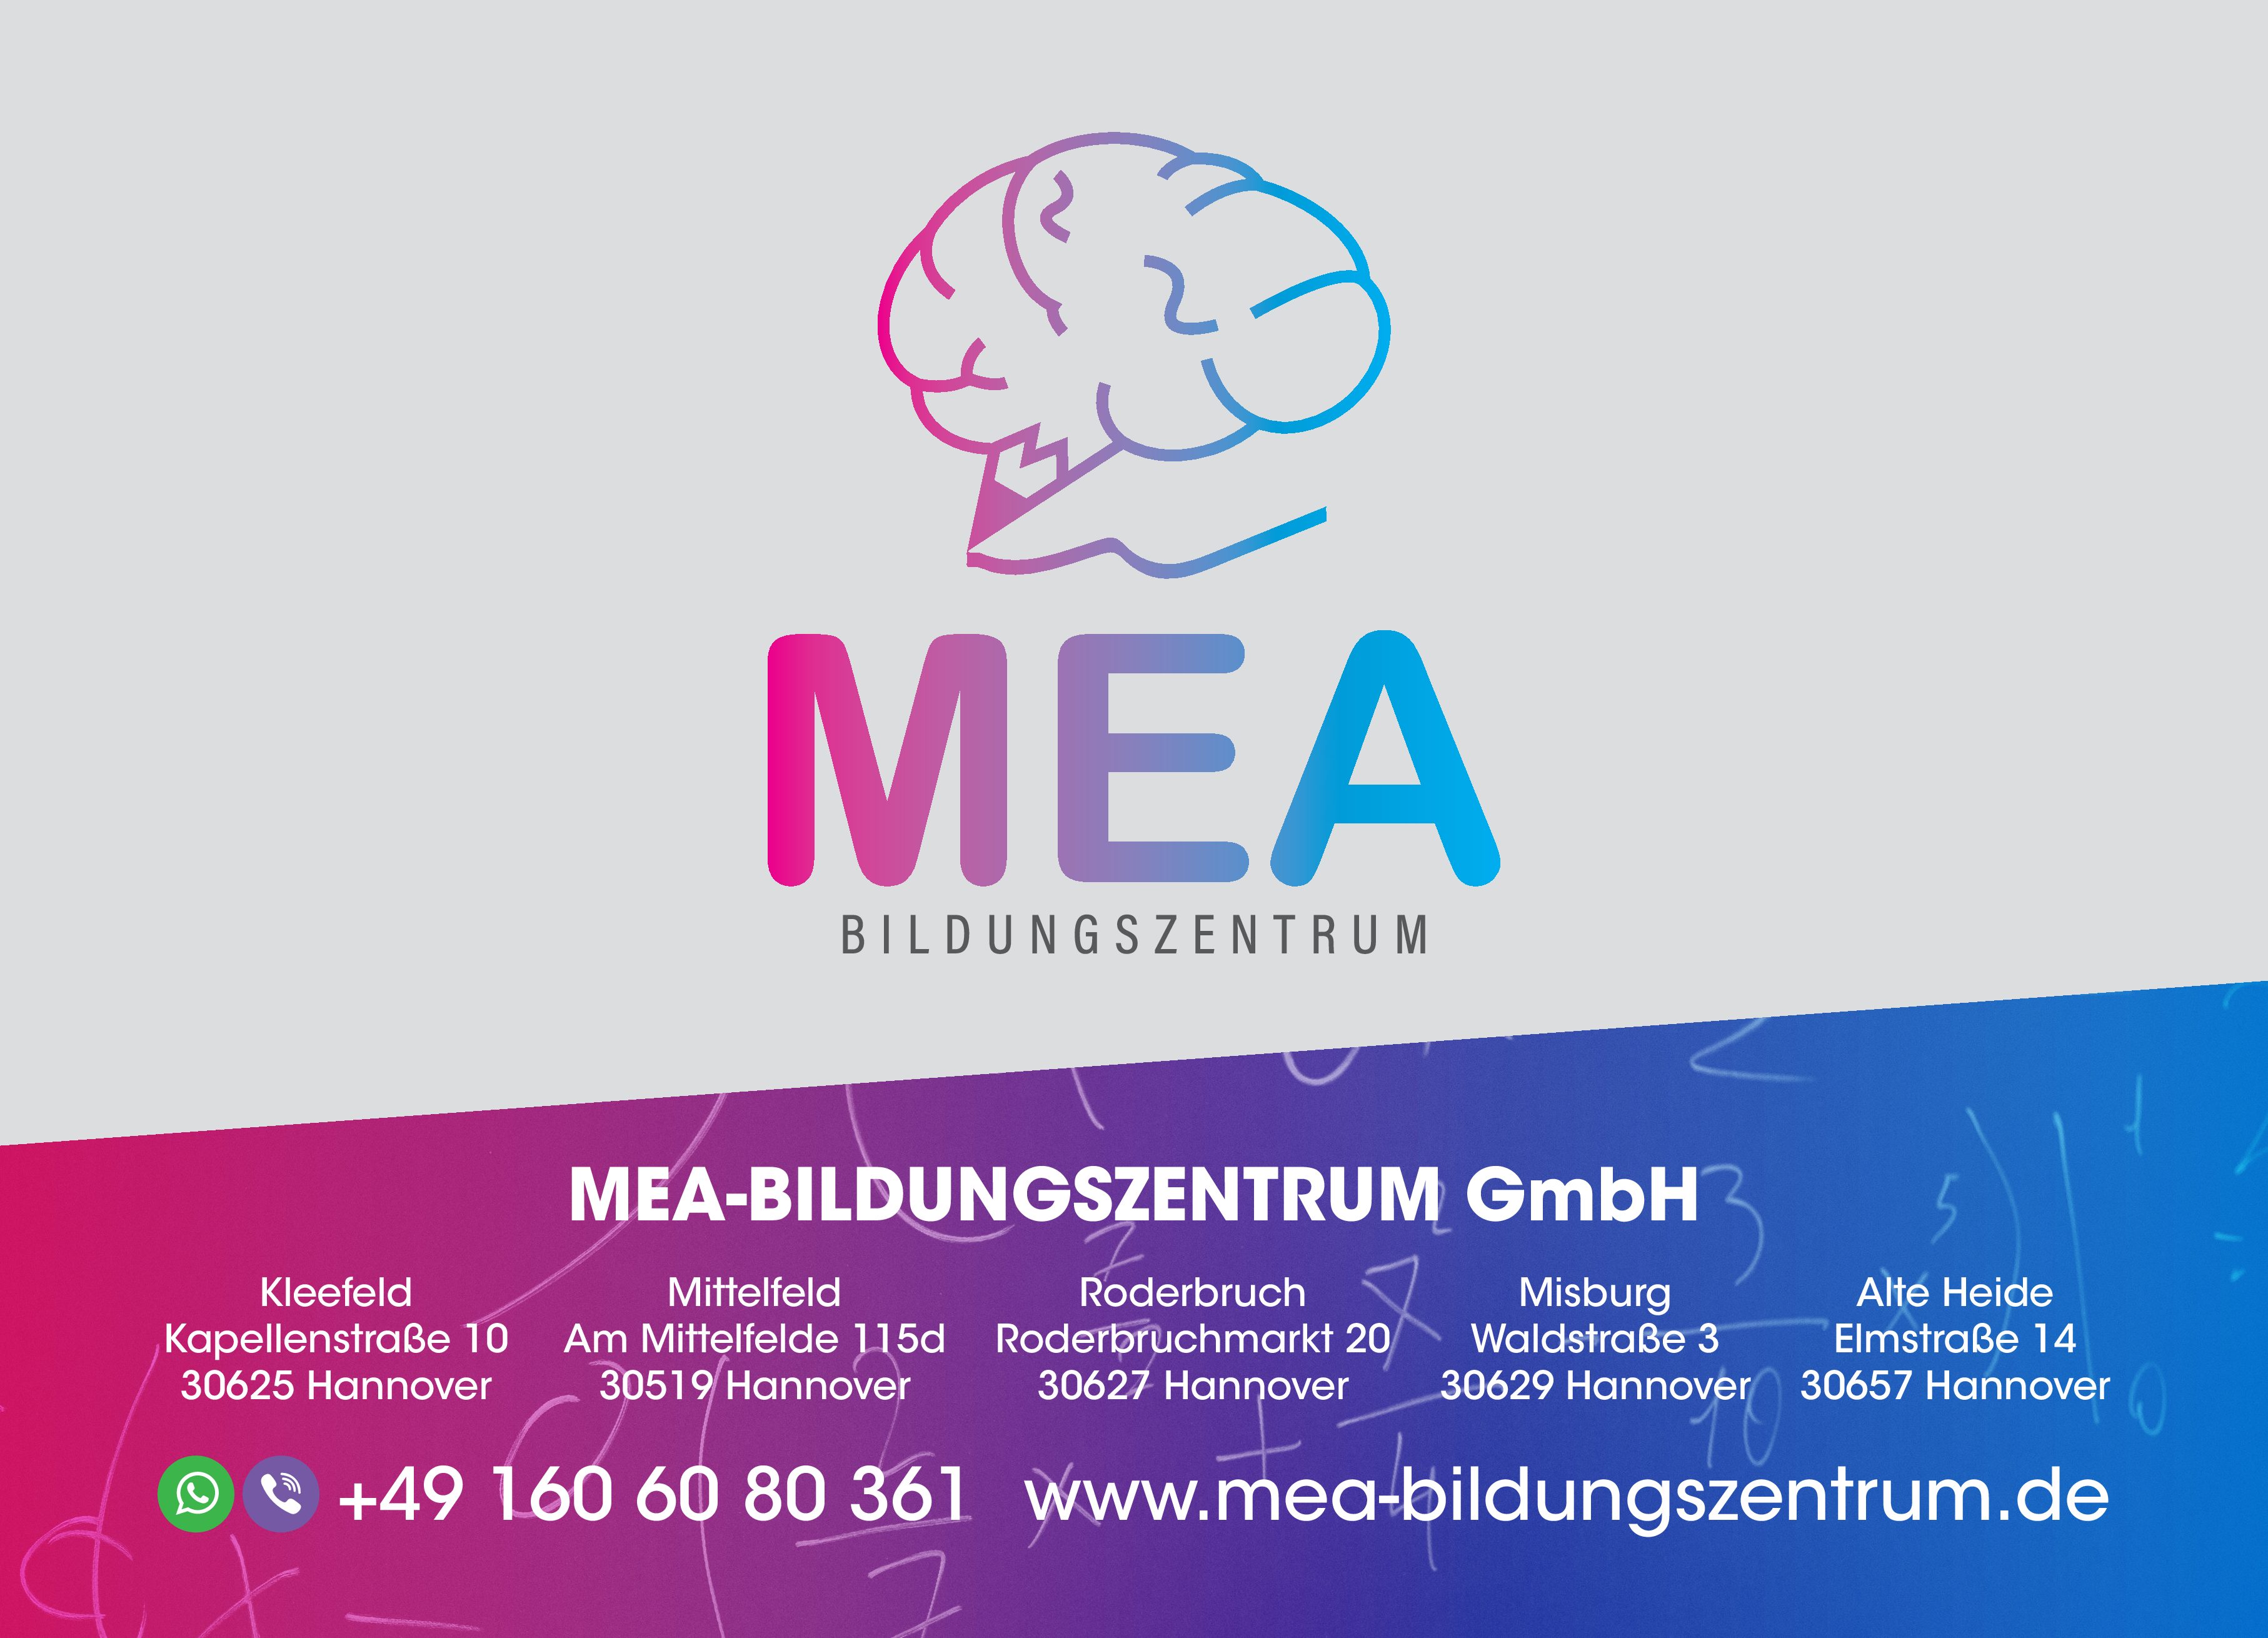 You are currently viewing Neue Bande dank dem MEA-Bildungszentrum